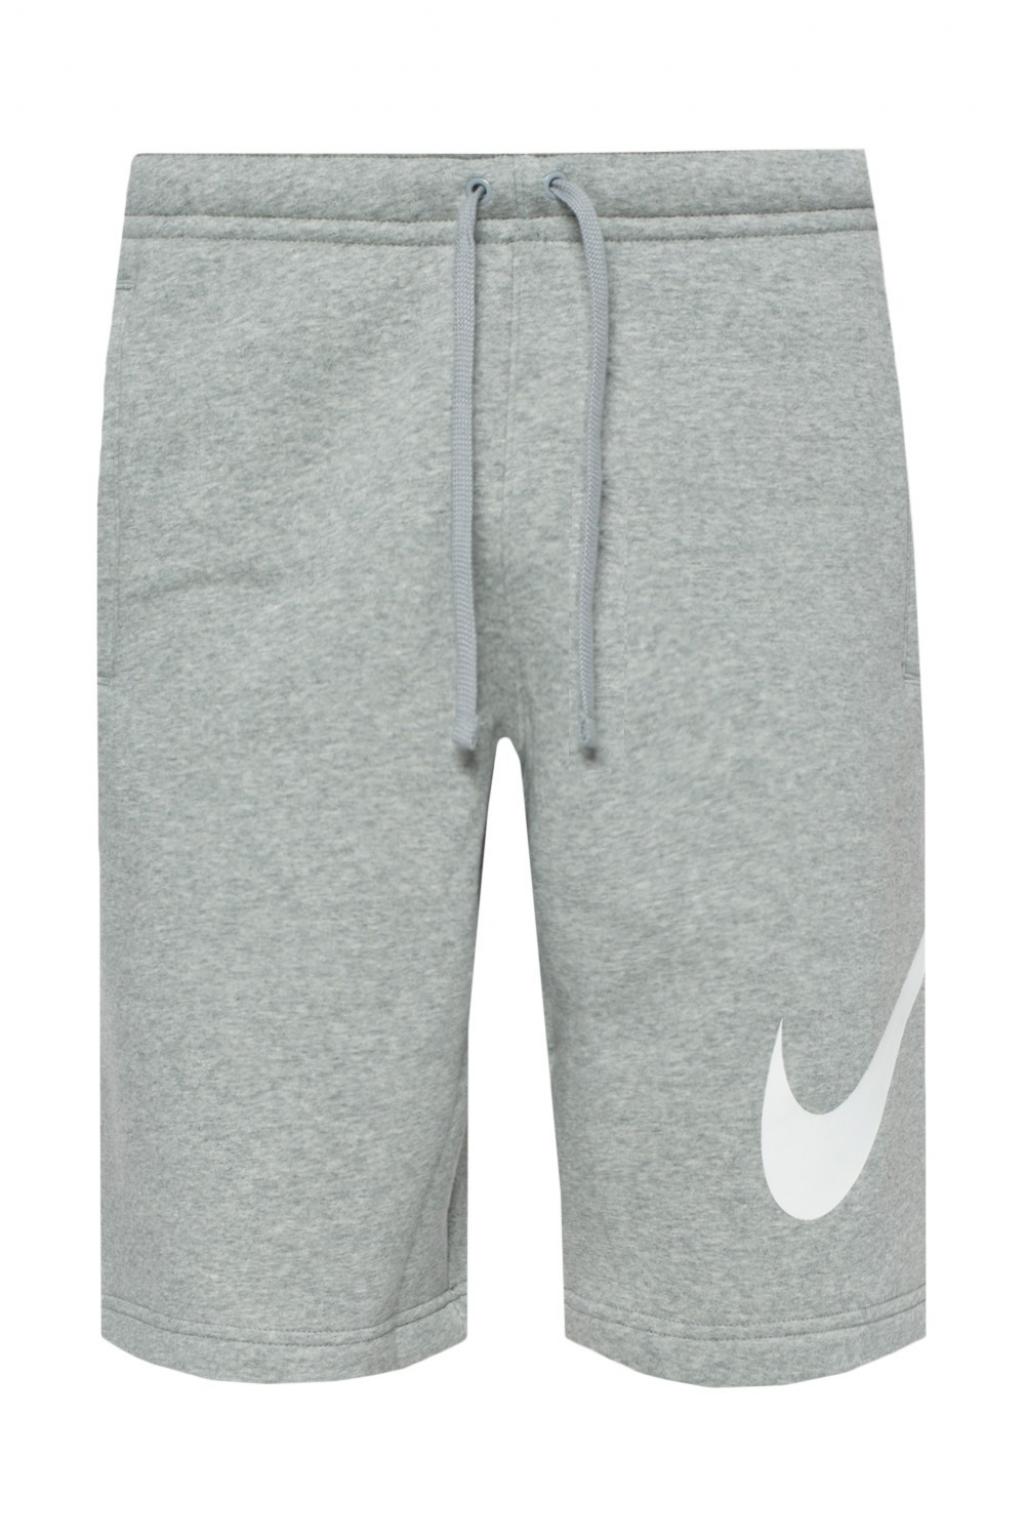 grey sweat shorts nike